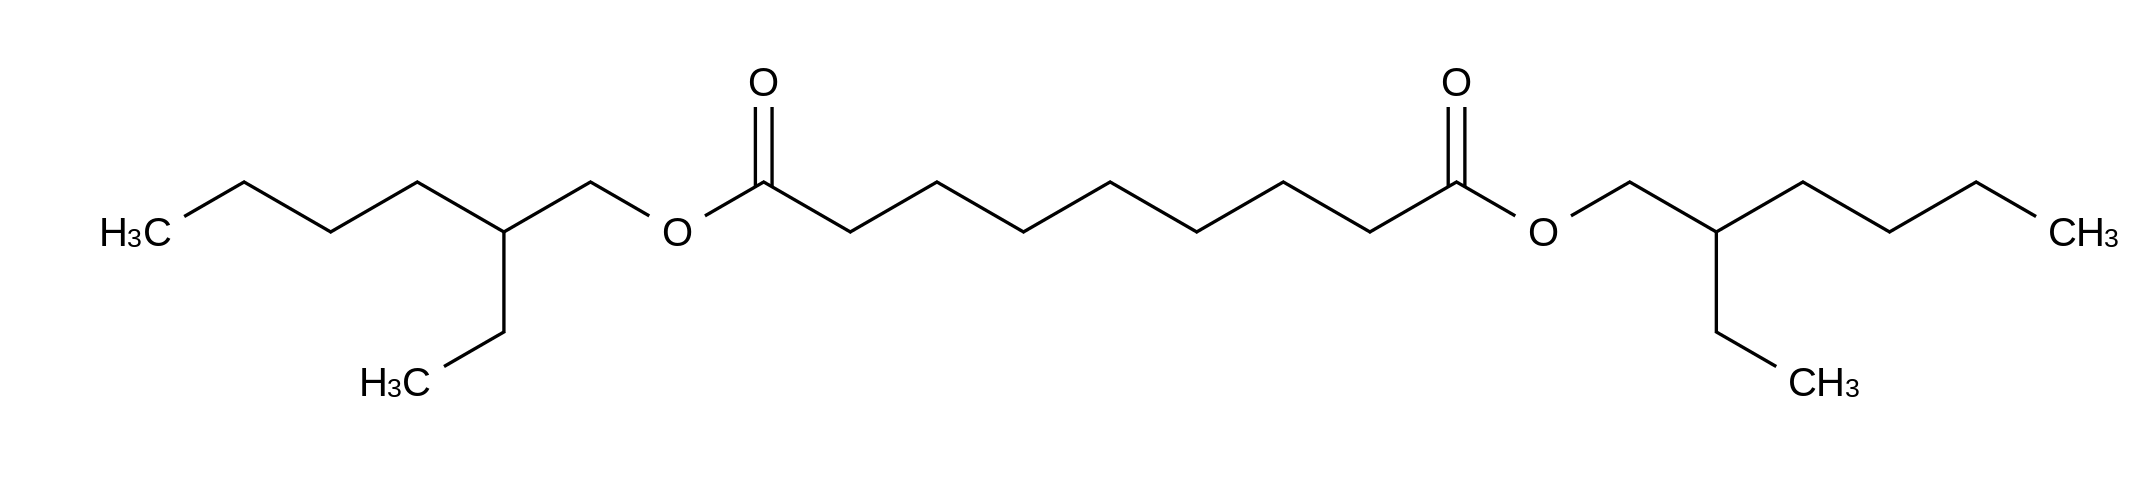 Bis(2-ethylhexyl) Azelate